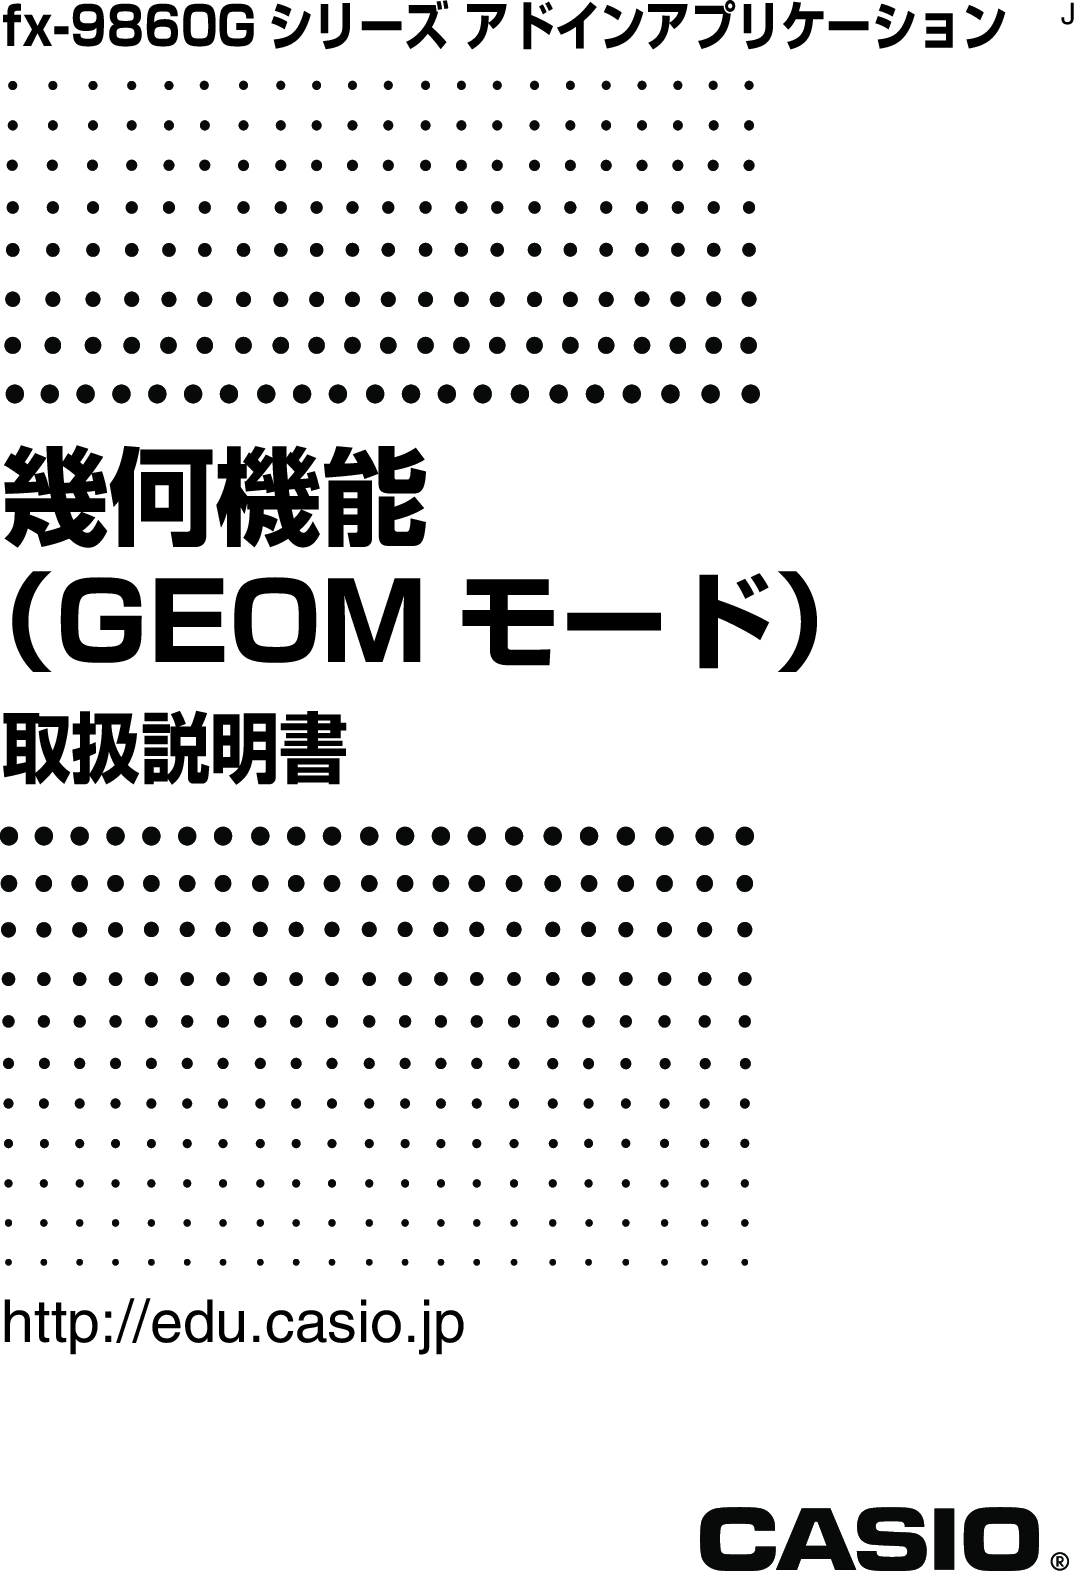 casio-geometry-j-geom-geometry-j